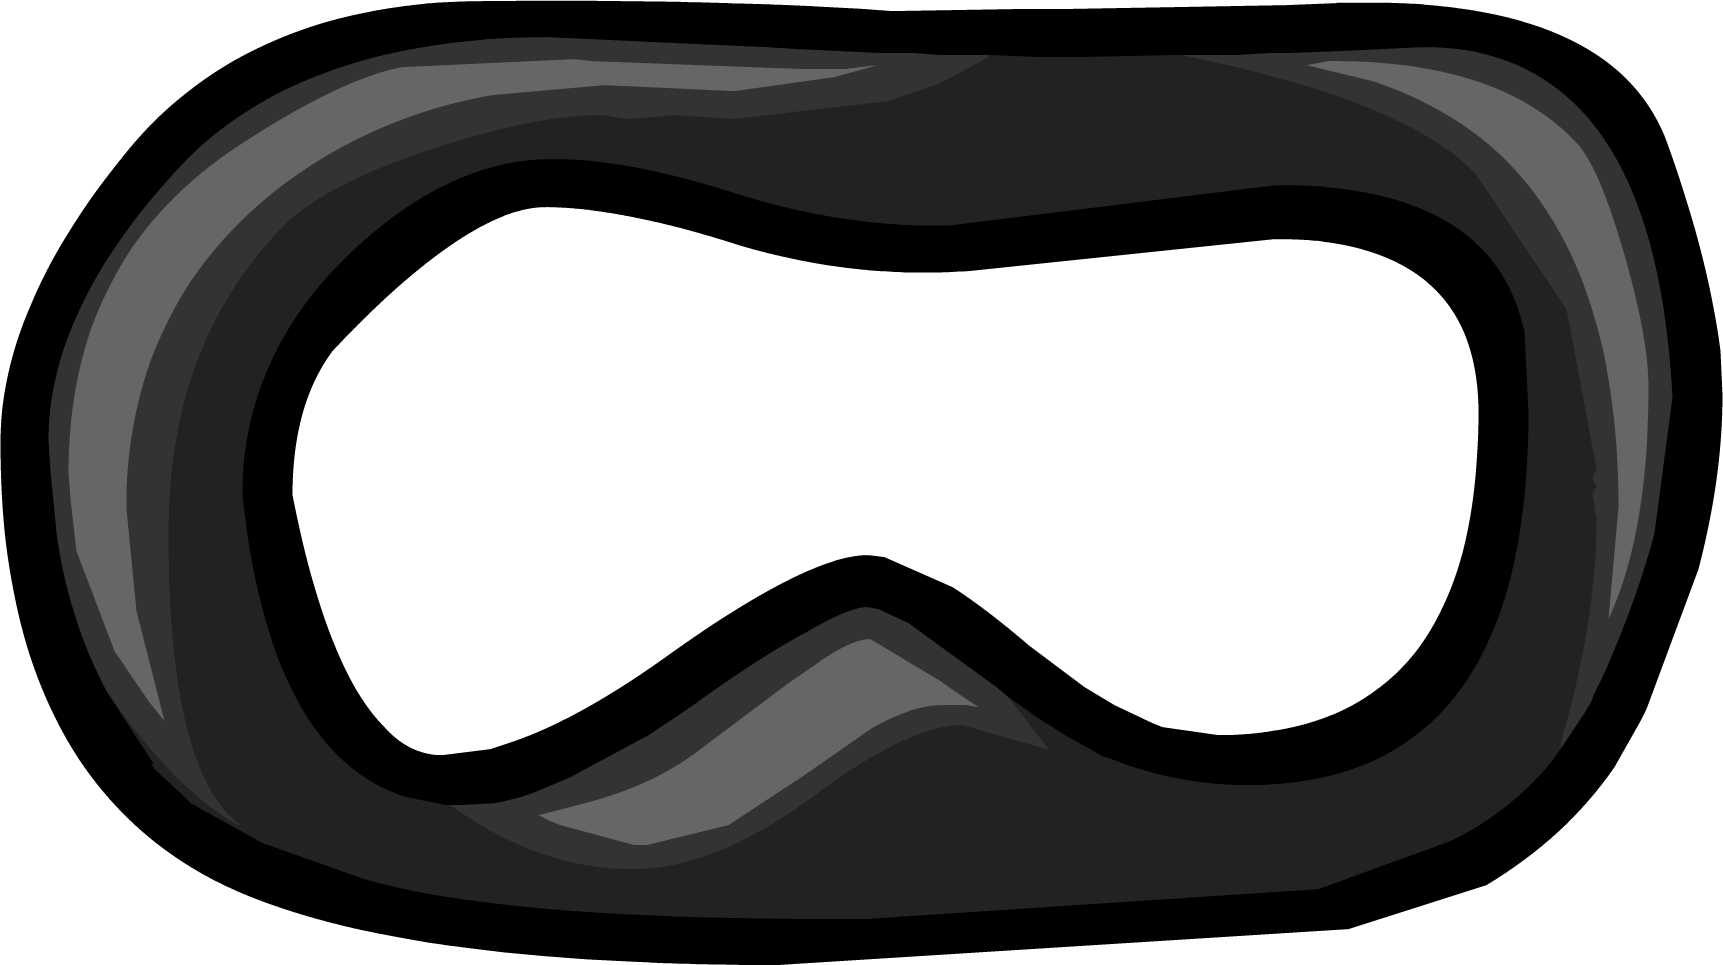 Mask - Club Penguin Black Mask (1723x965)